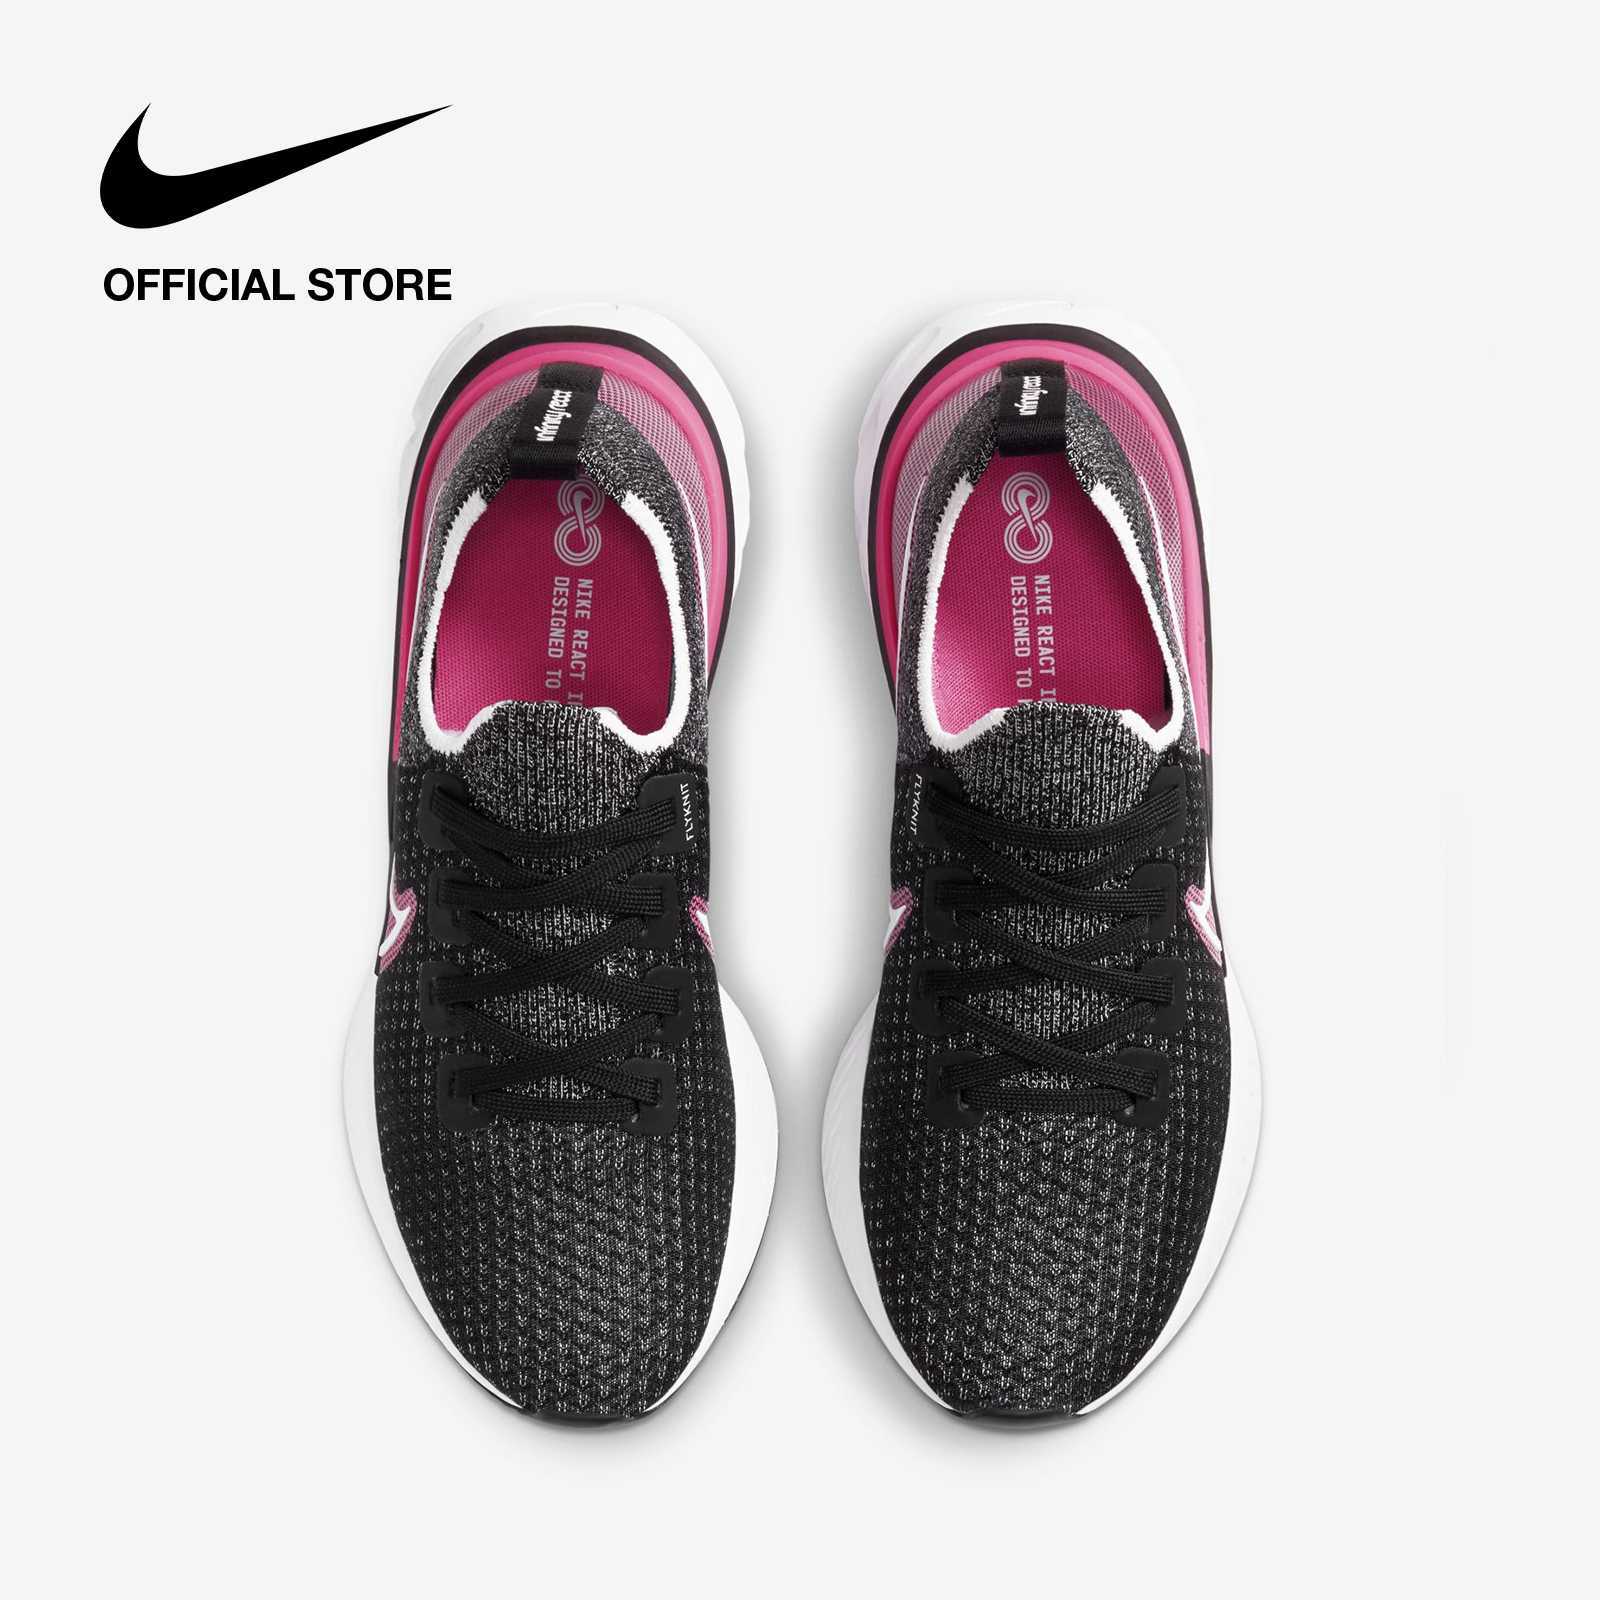 Nike Women's React Infinity Run Flyknit Shoes - Black รองเท้าผู้หญิง Nike React Infinity Run Flyknit - สีดำ